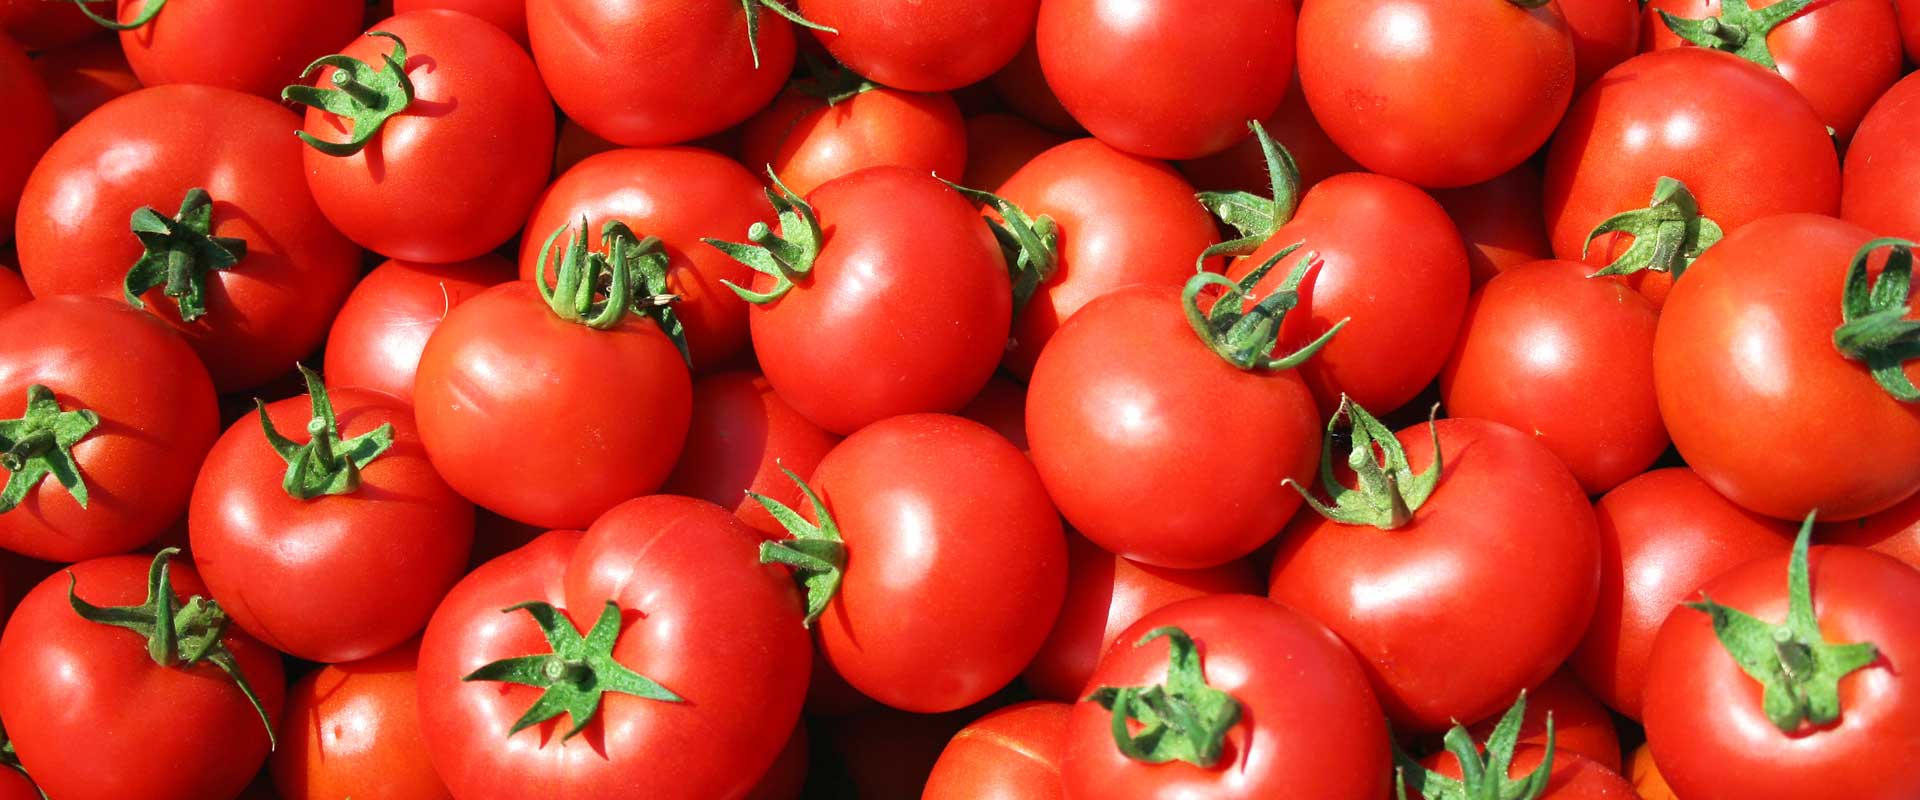 tomato yields case study